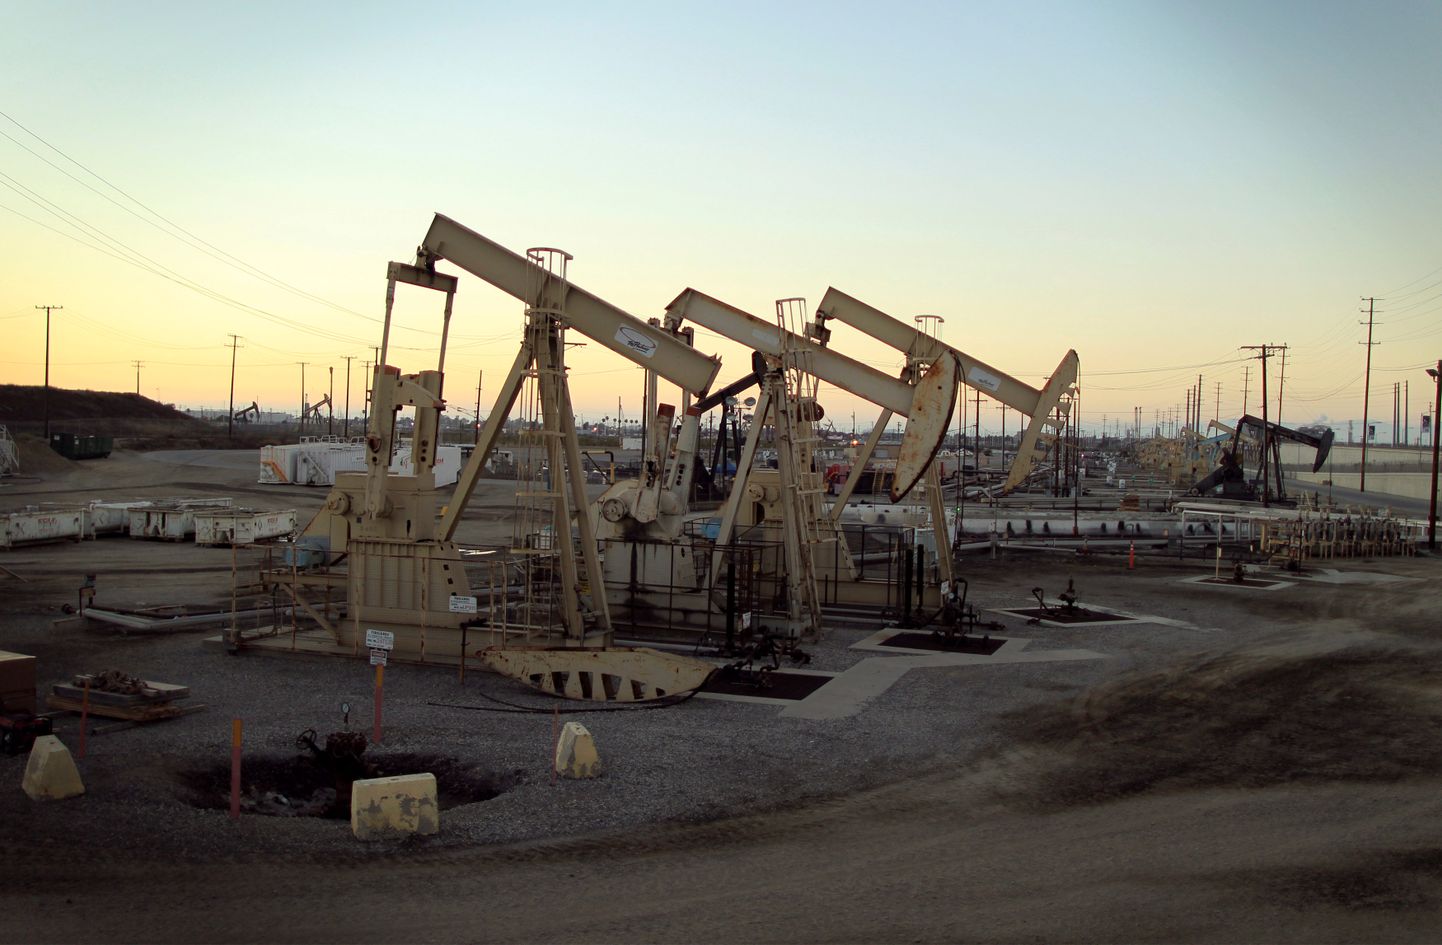 Naftapumbad Californias, USAs.